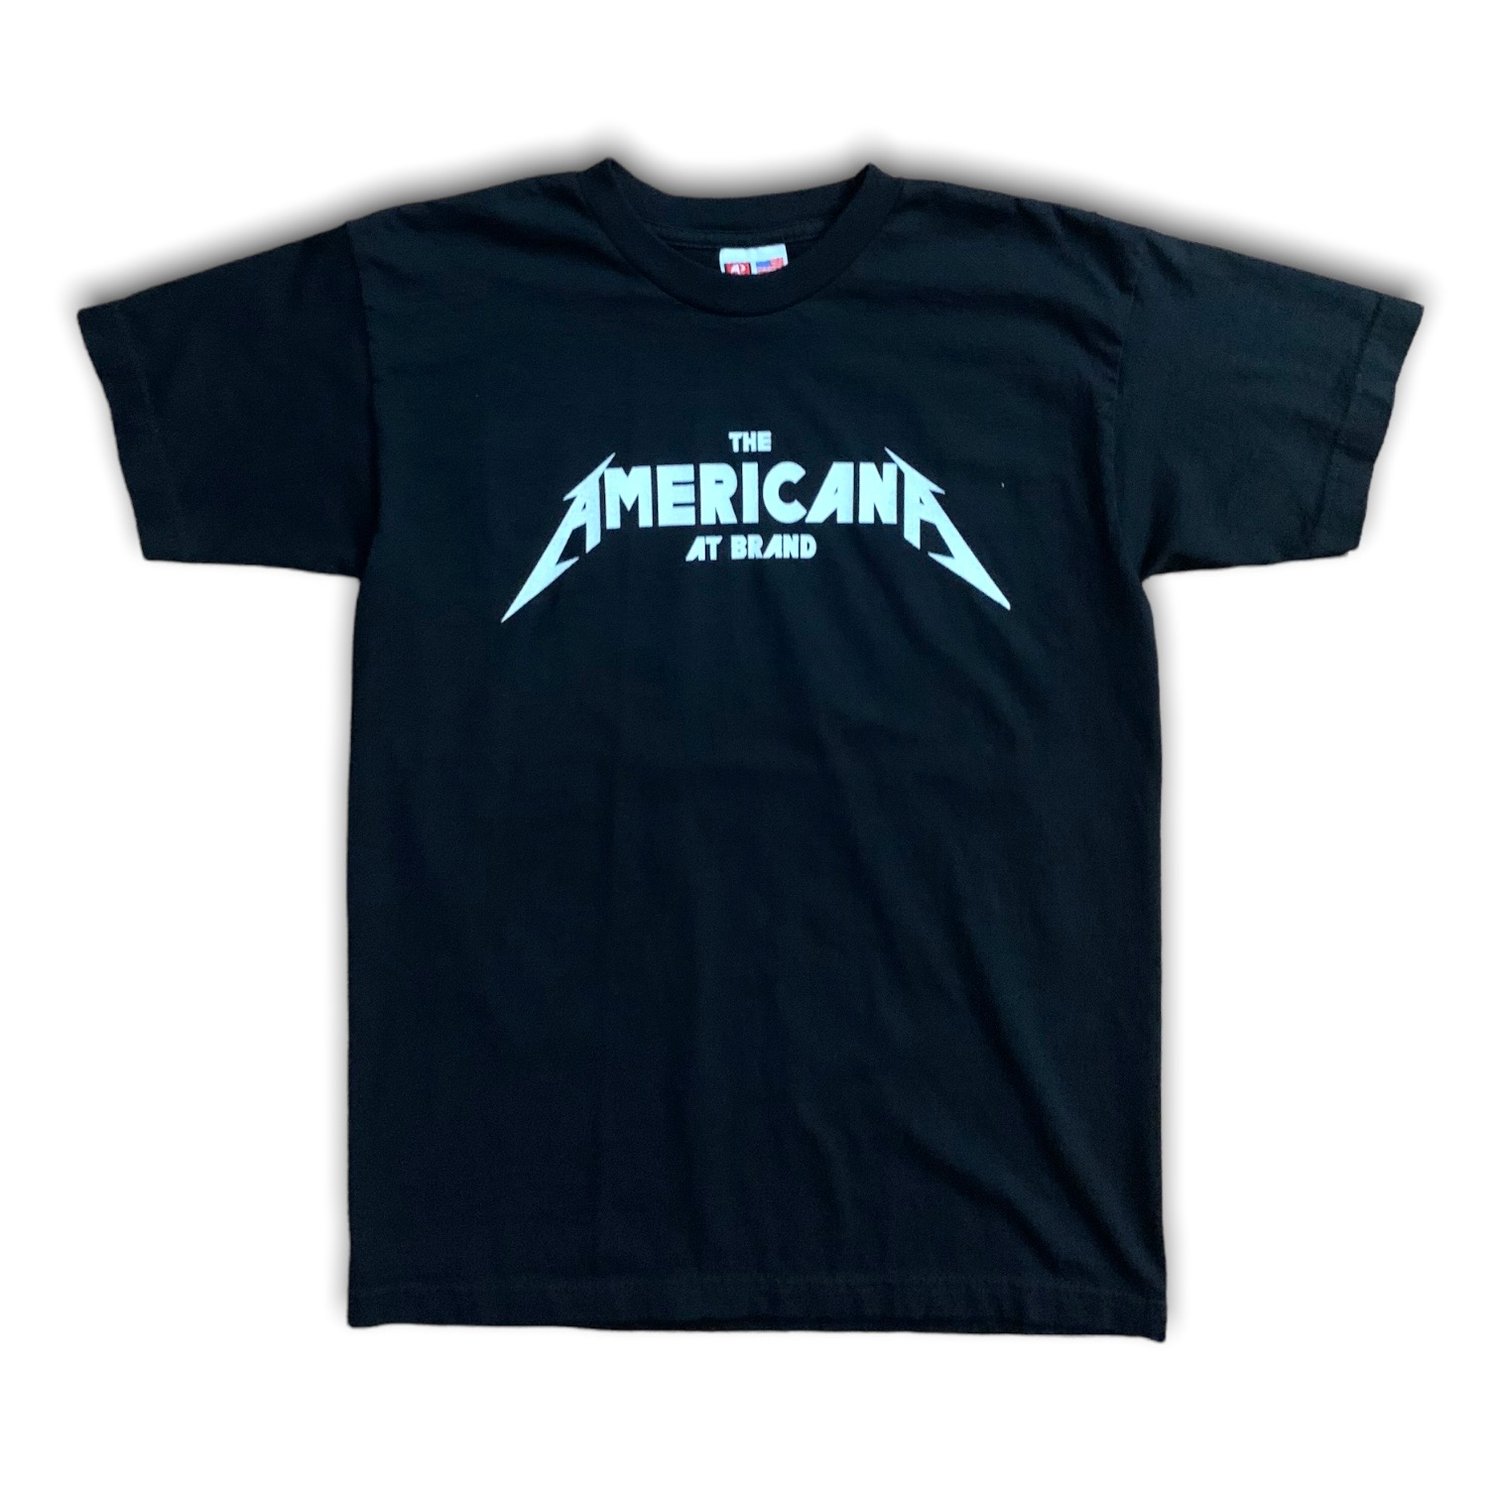 Americana New Black Tee - Most Sizes